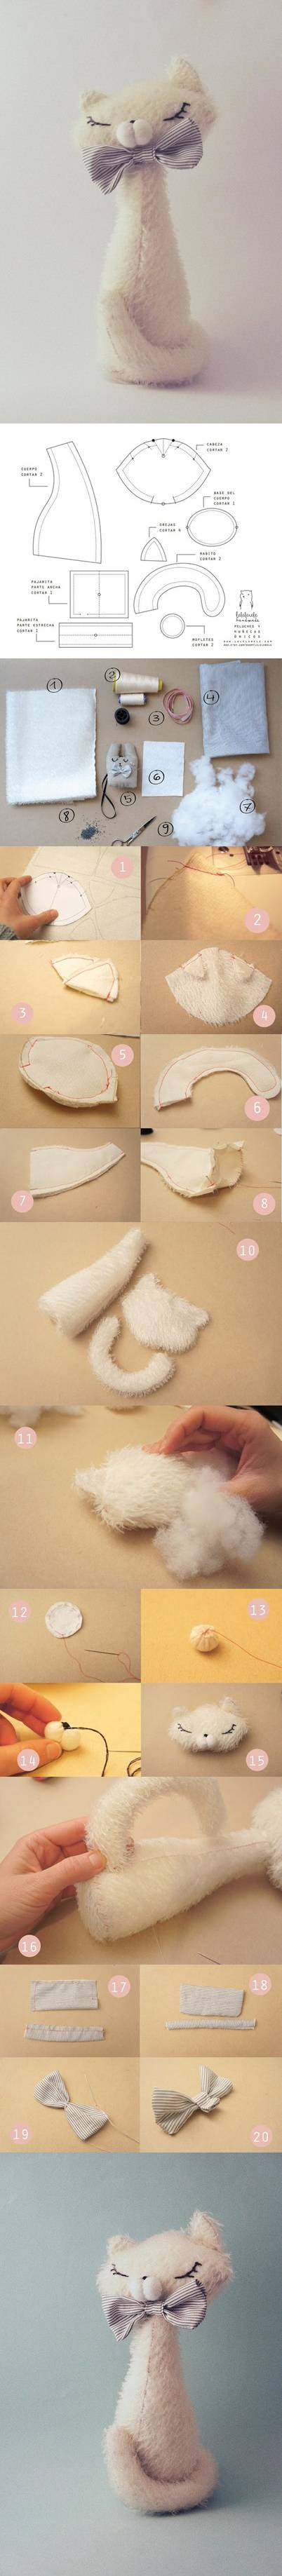 How to sew DIY elegant cat step by step tutorial instructions How to sew DIY elegant cat step by step tutorial instructions